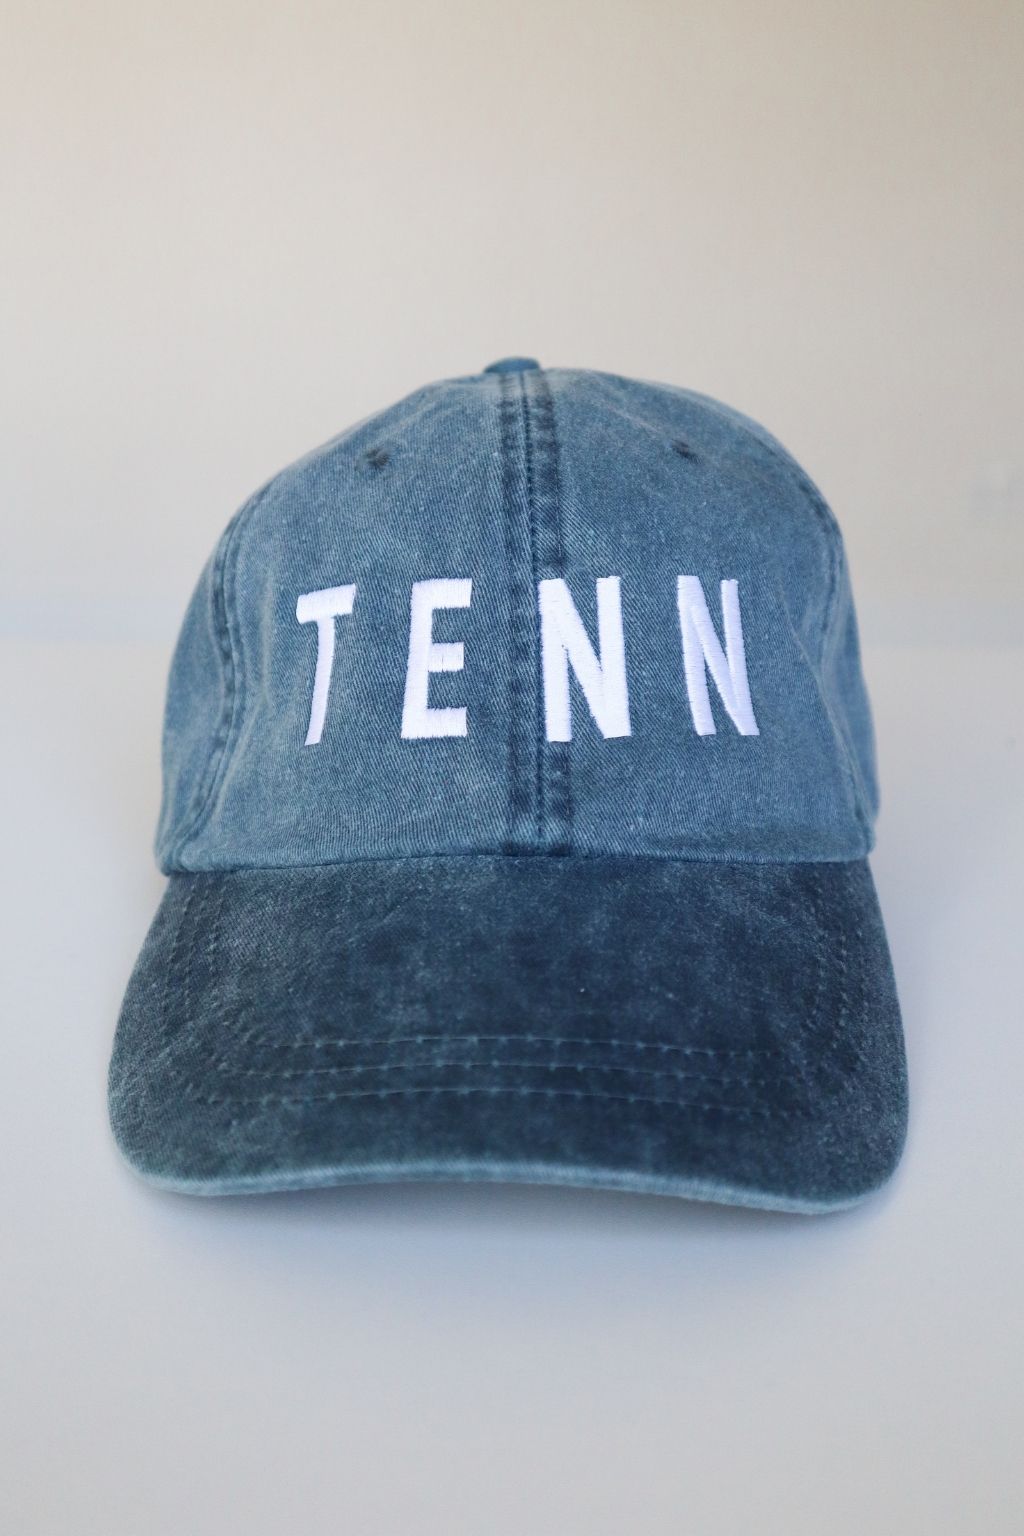 TENN Embroidered Baseball Cap